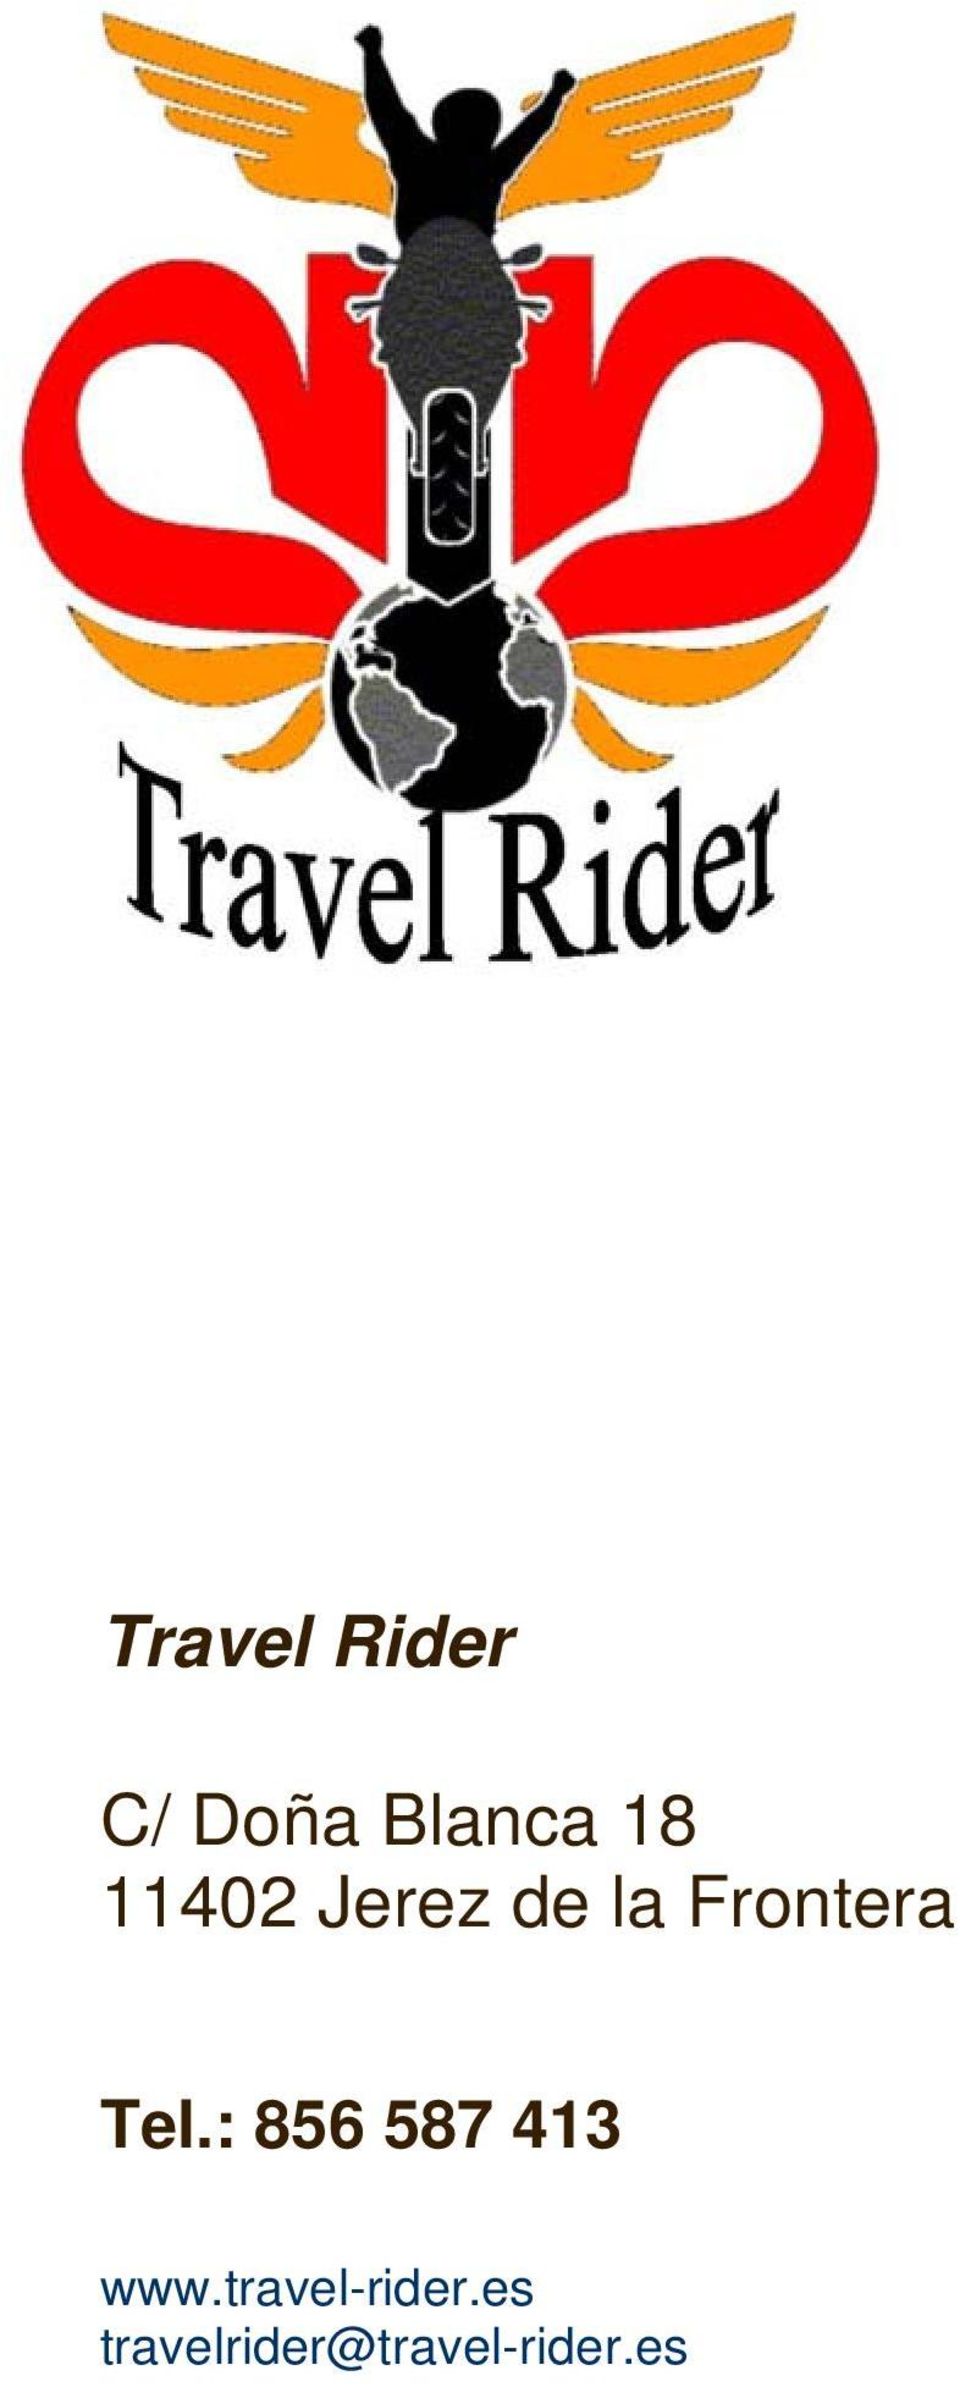 : 856 587 413 www.travel-rider.